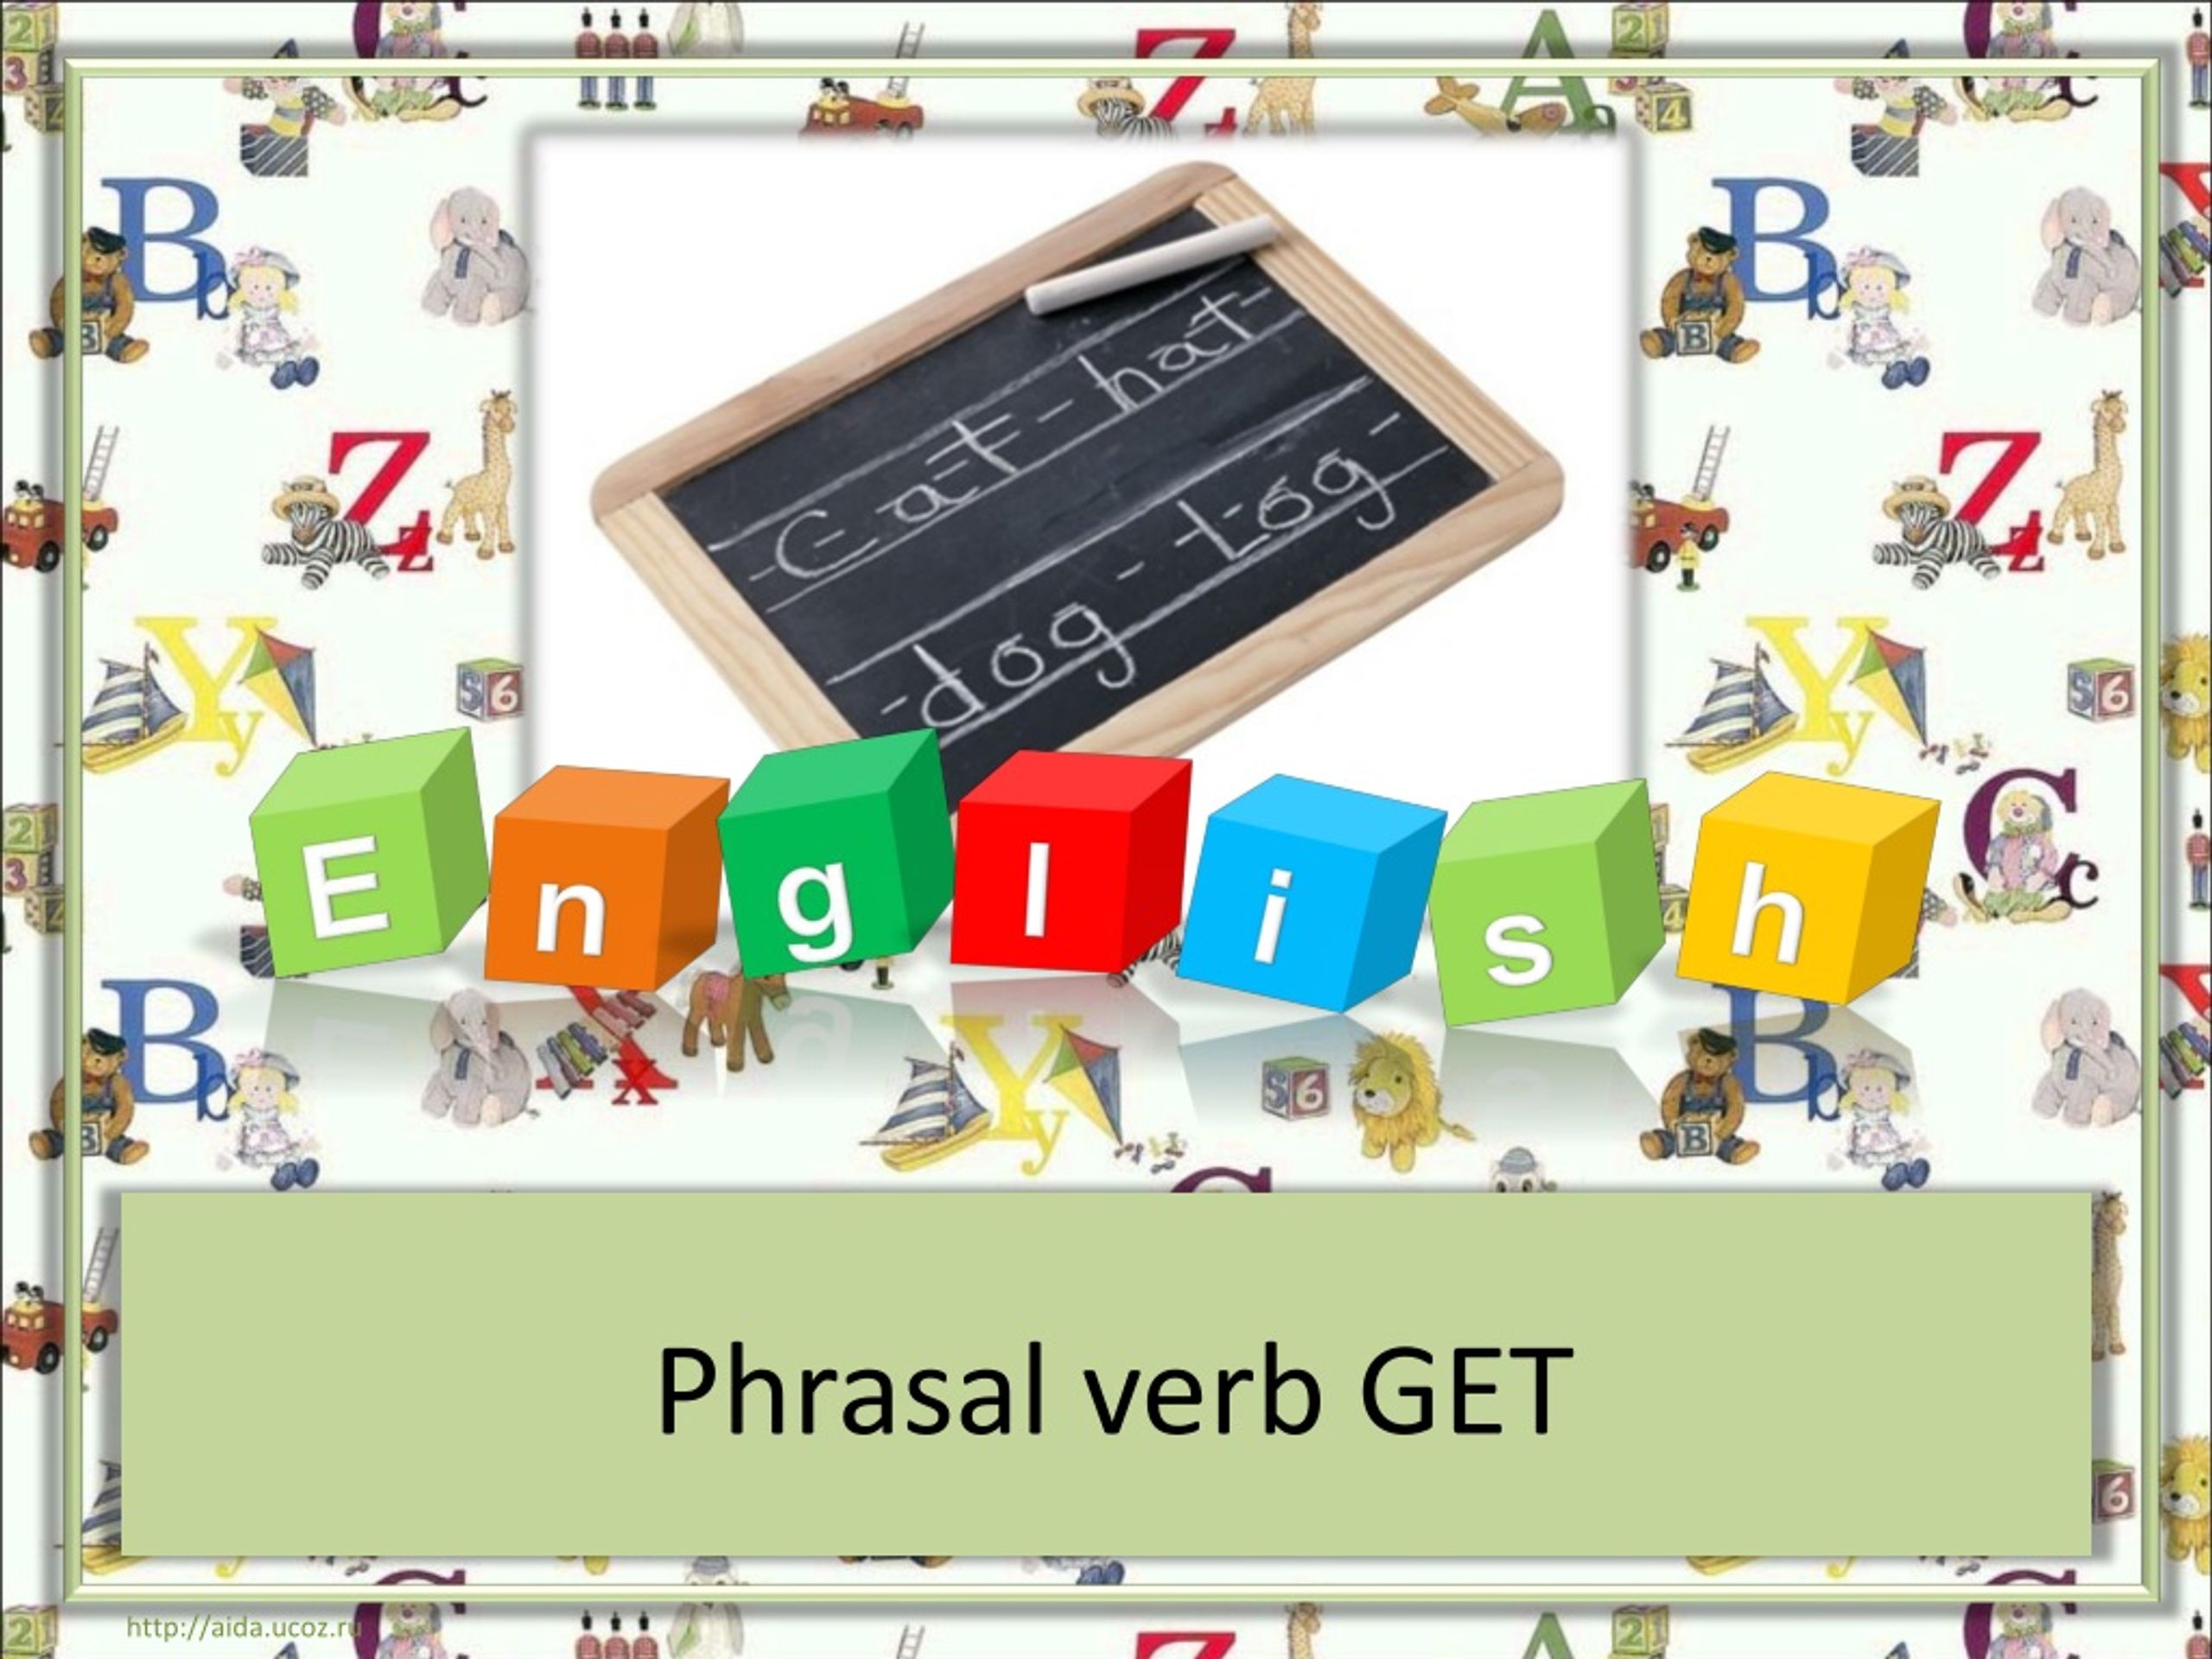 Phrasal Verb – Get Over «